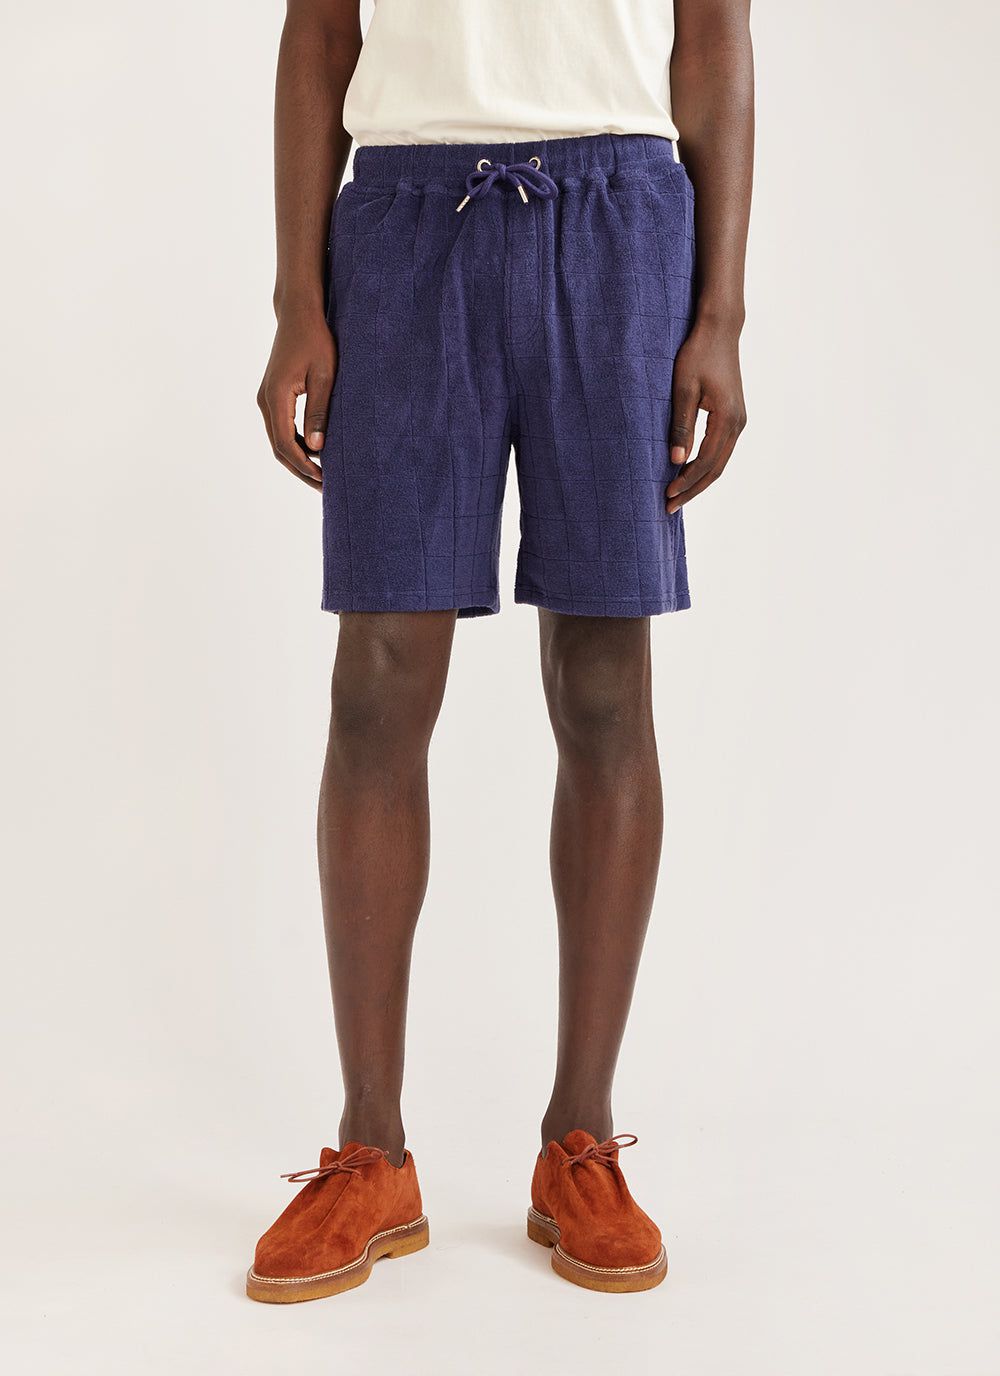 Men's Shorts | Organic Cotton | Terry Towelling | Percival Menswear